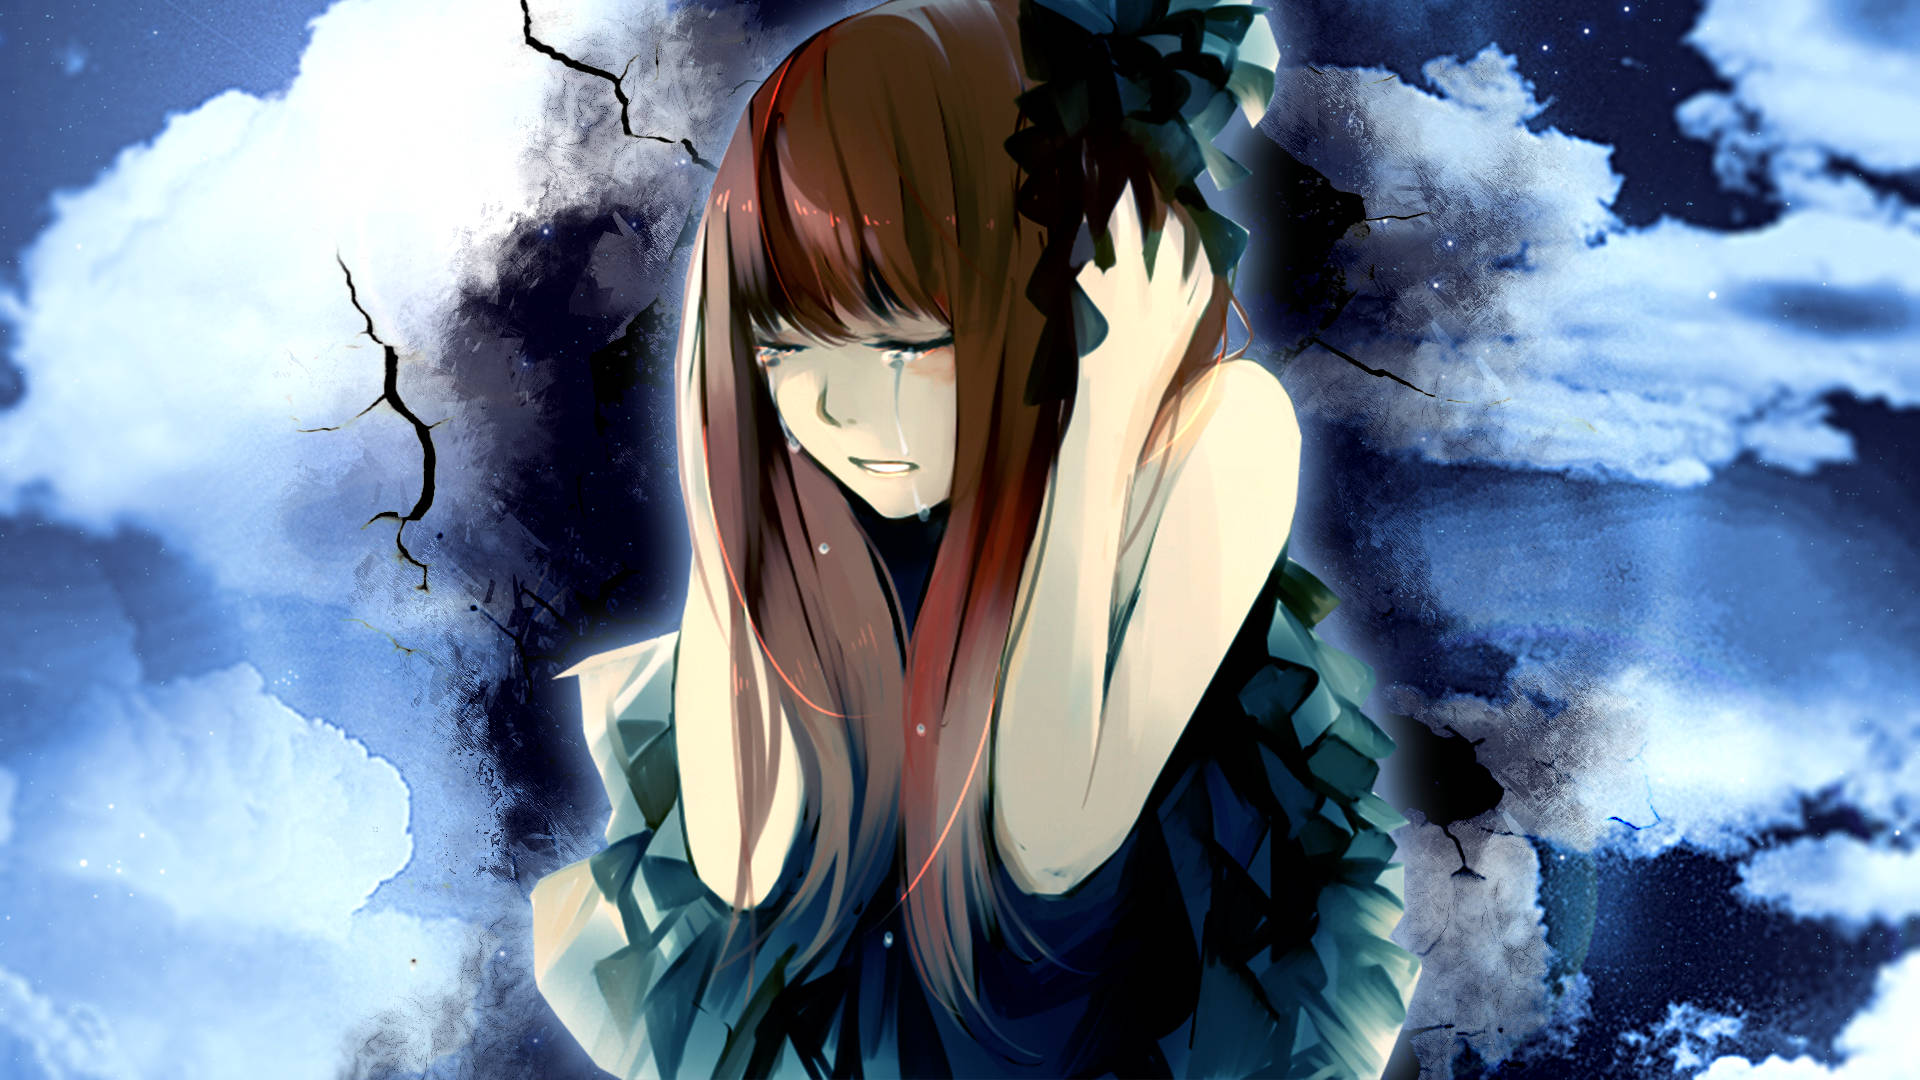 Depressed Sad Anime Girl Wallpaper